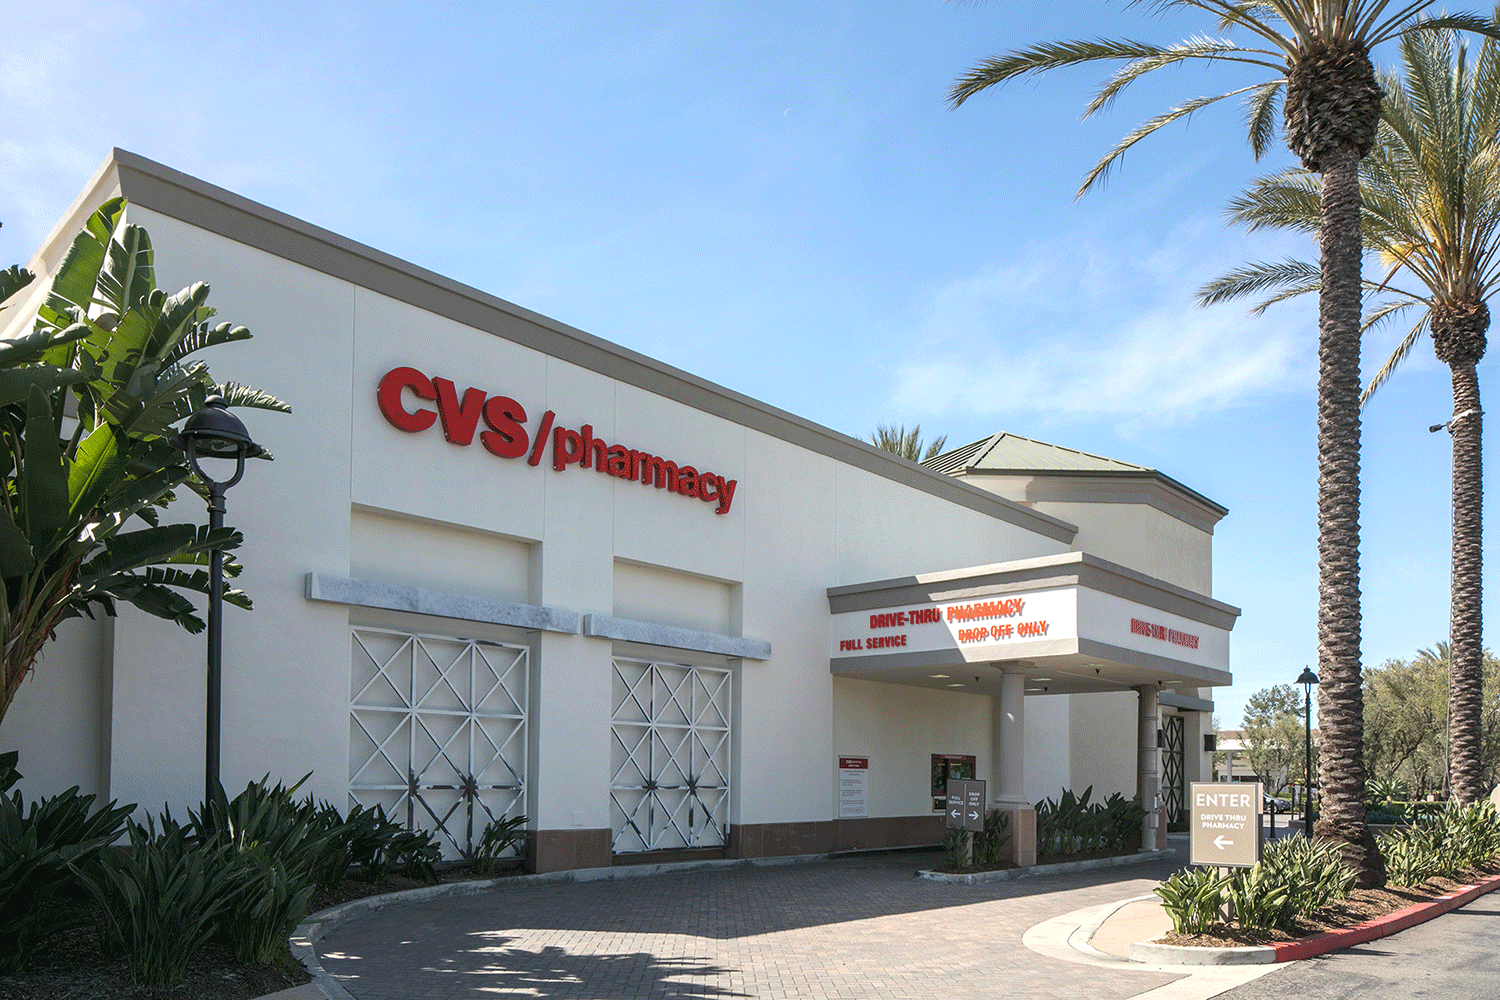  View of CVS/pharmacy at Culver Plaza